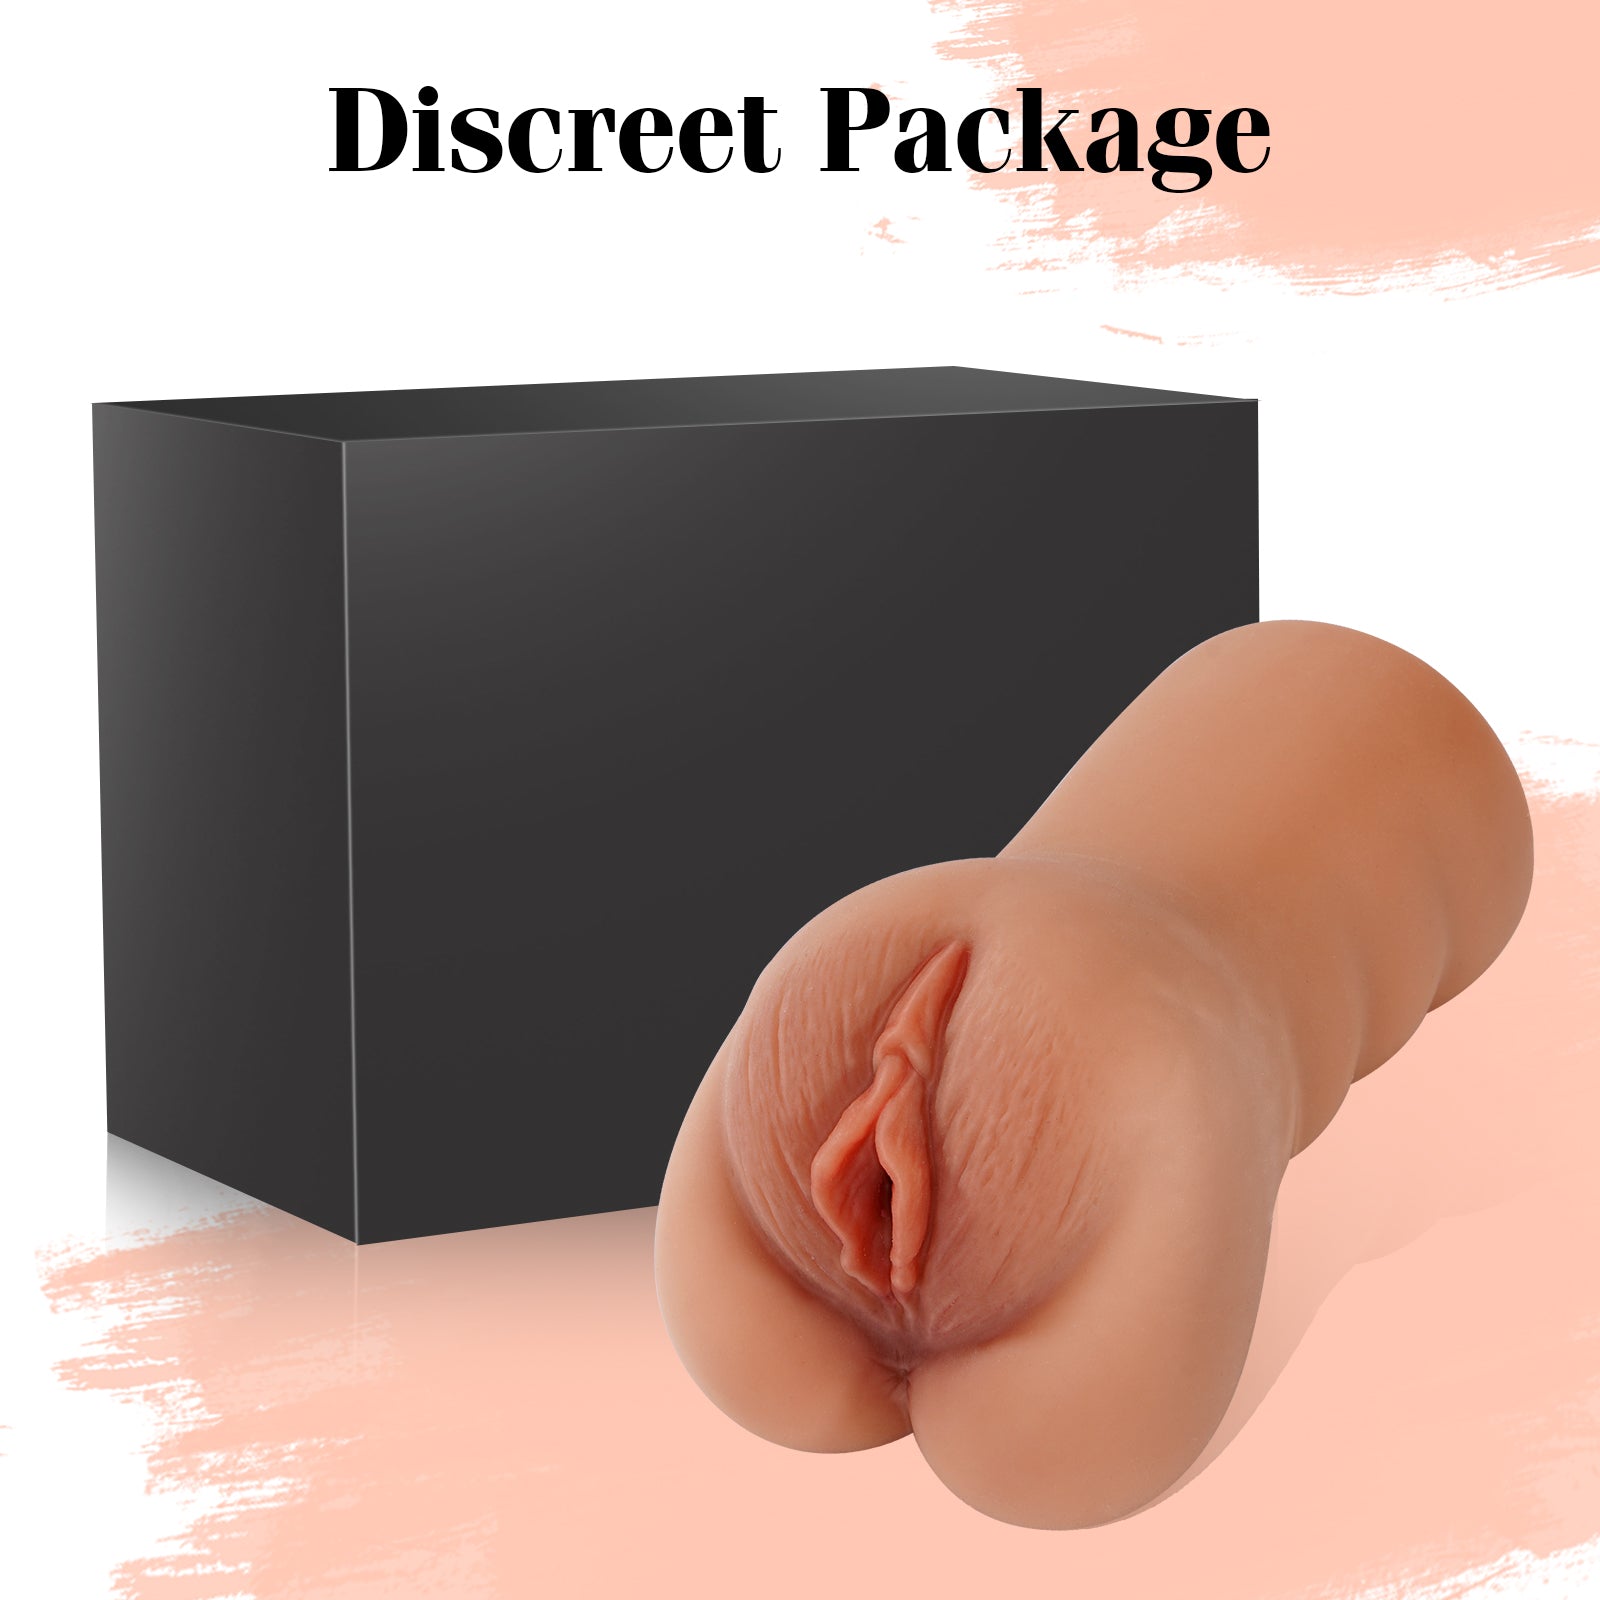 Lifelike Threaded Vaginal Opening Pocket Pussy